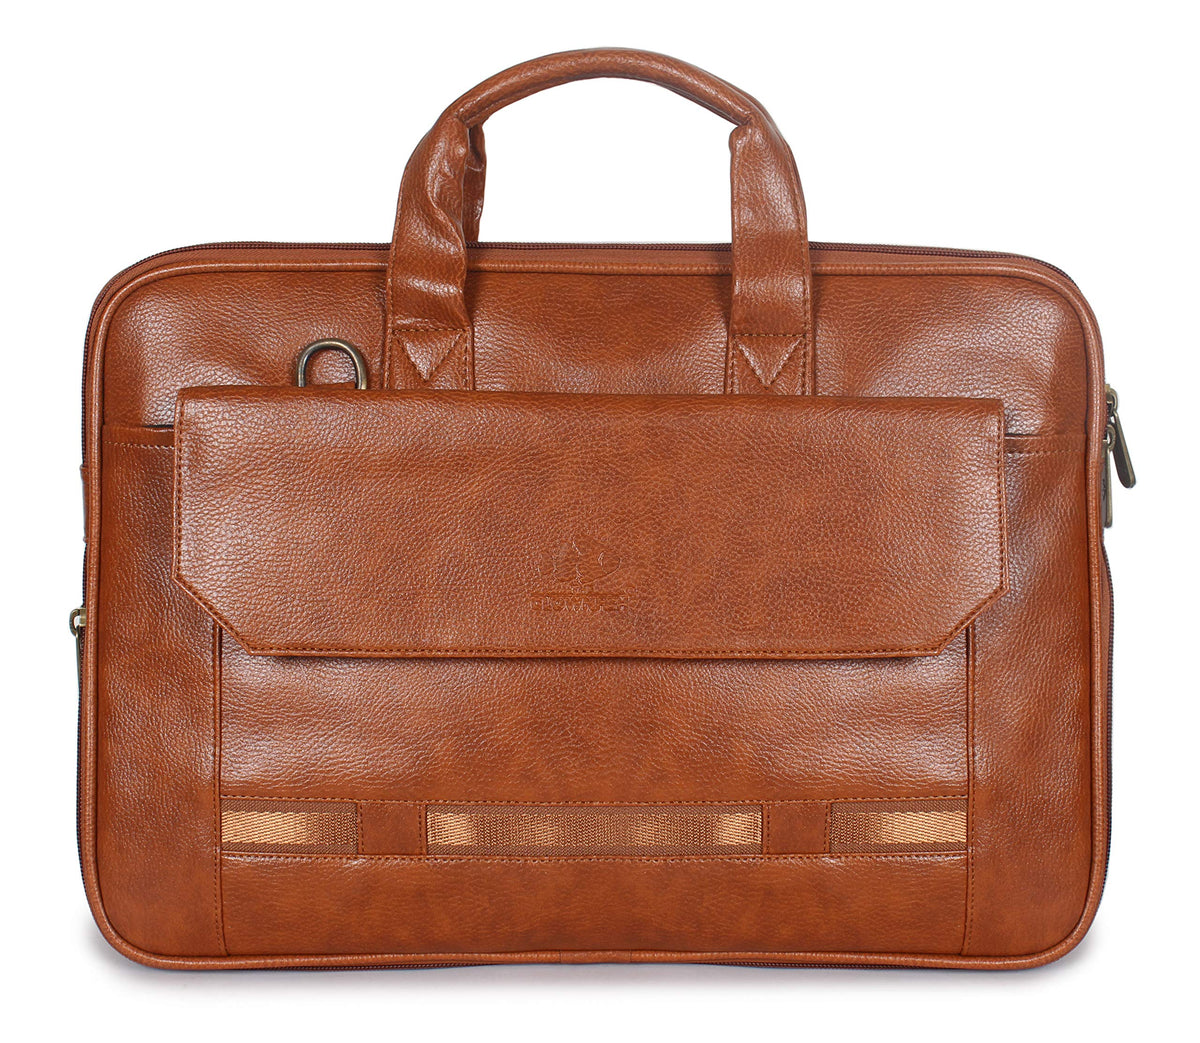 The Clownfish Triton Faux Leather Expandable 12 inch Laptop Tablet Messenger Bag Briefcase (Tan)